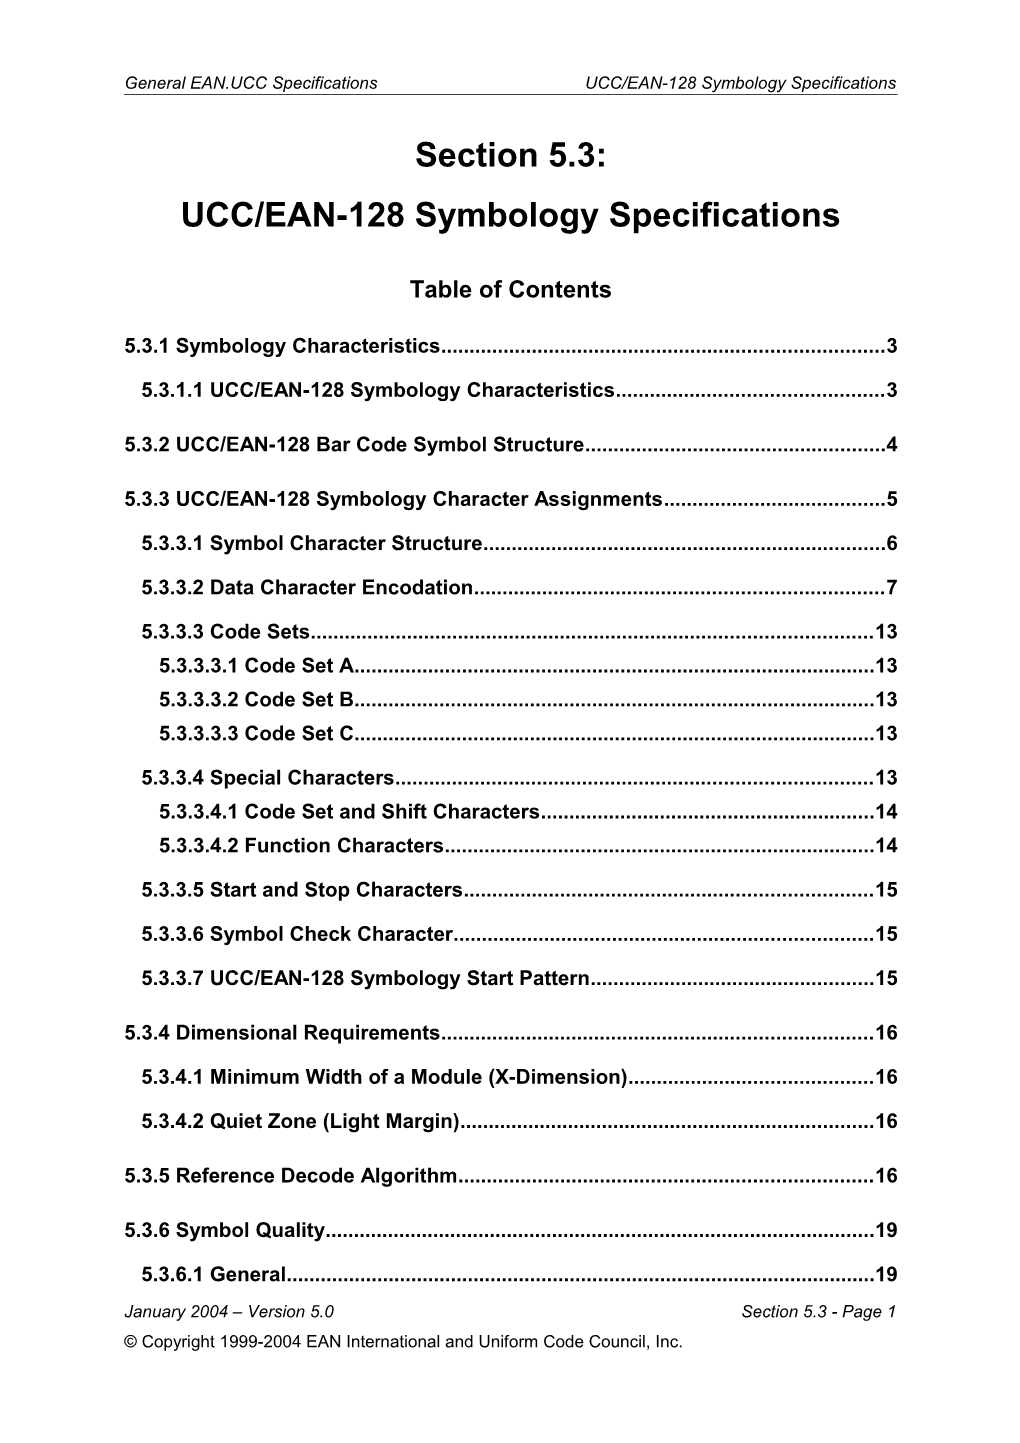 General EAN.UCC Specifications, V5.0